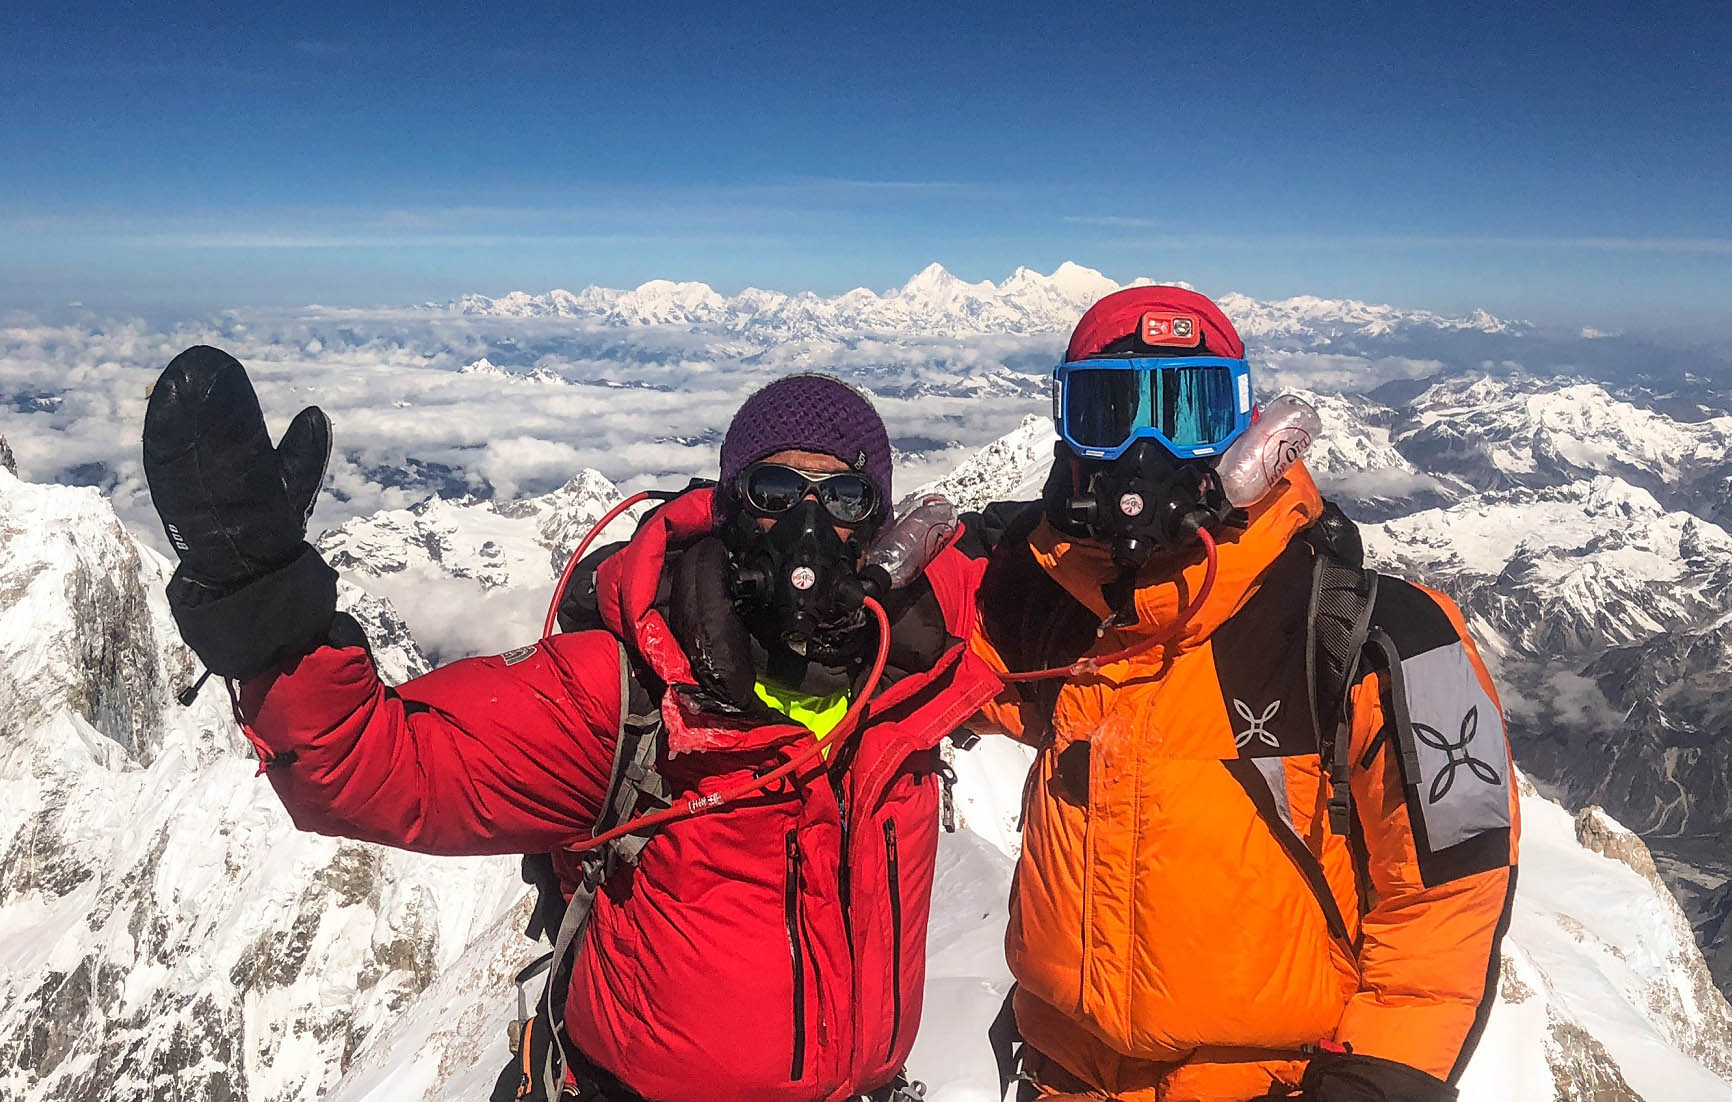 Arjun Vajpai summits Mt. Kangchenjunga